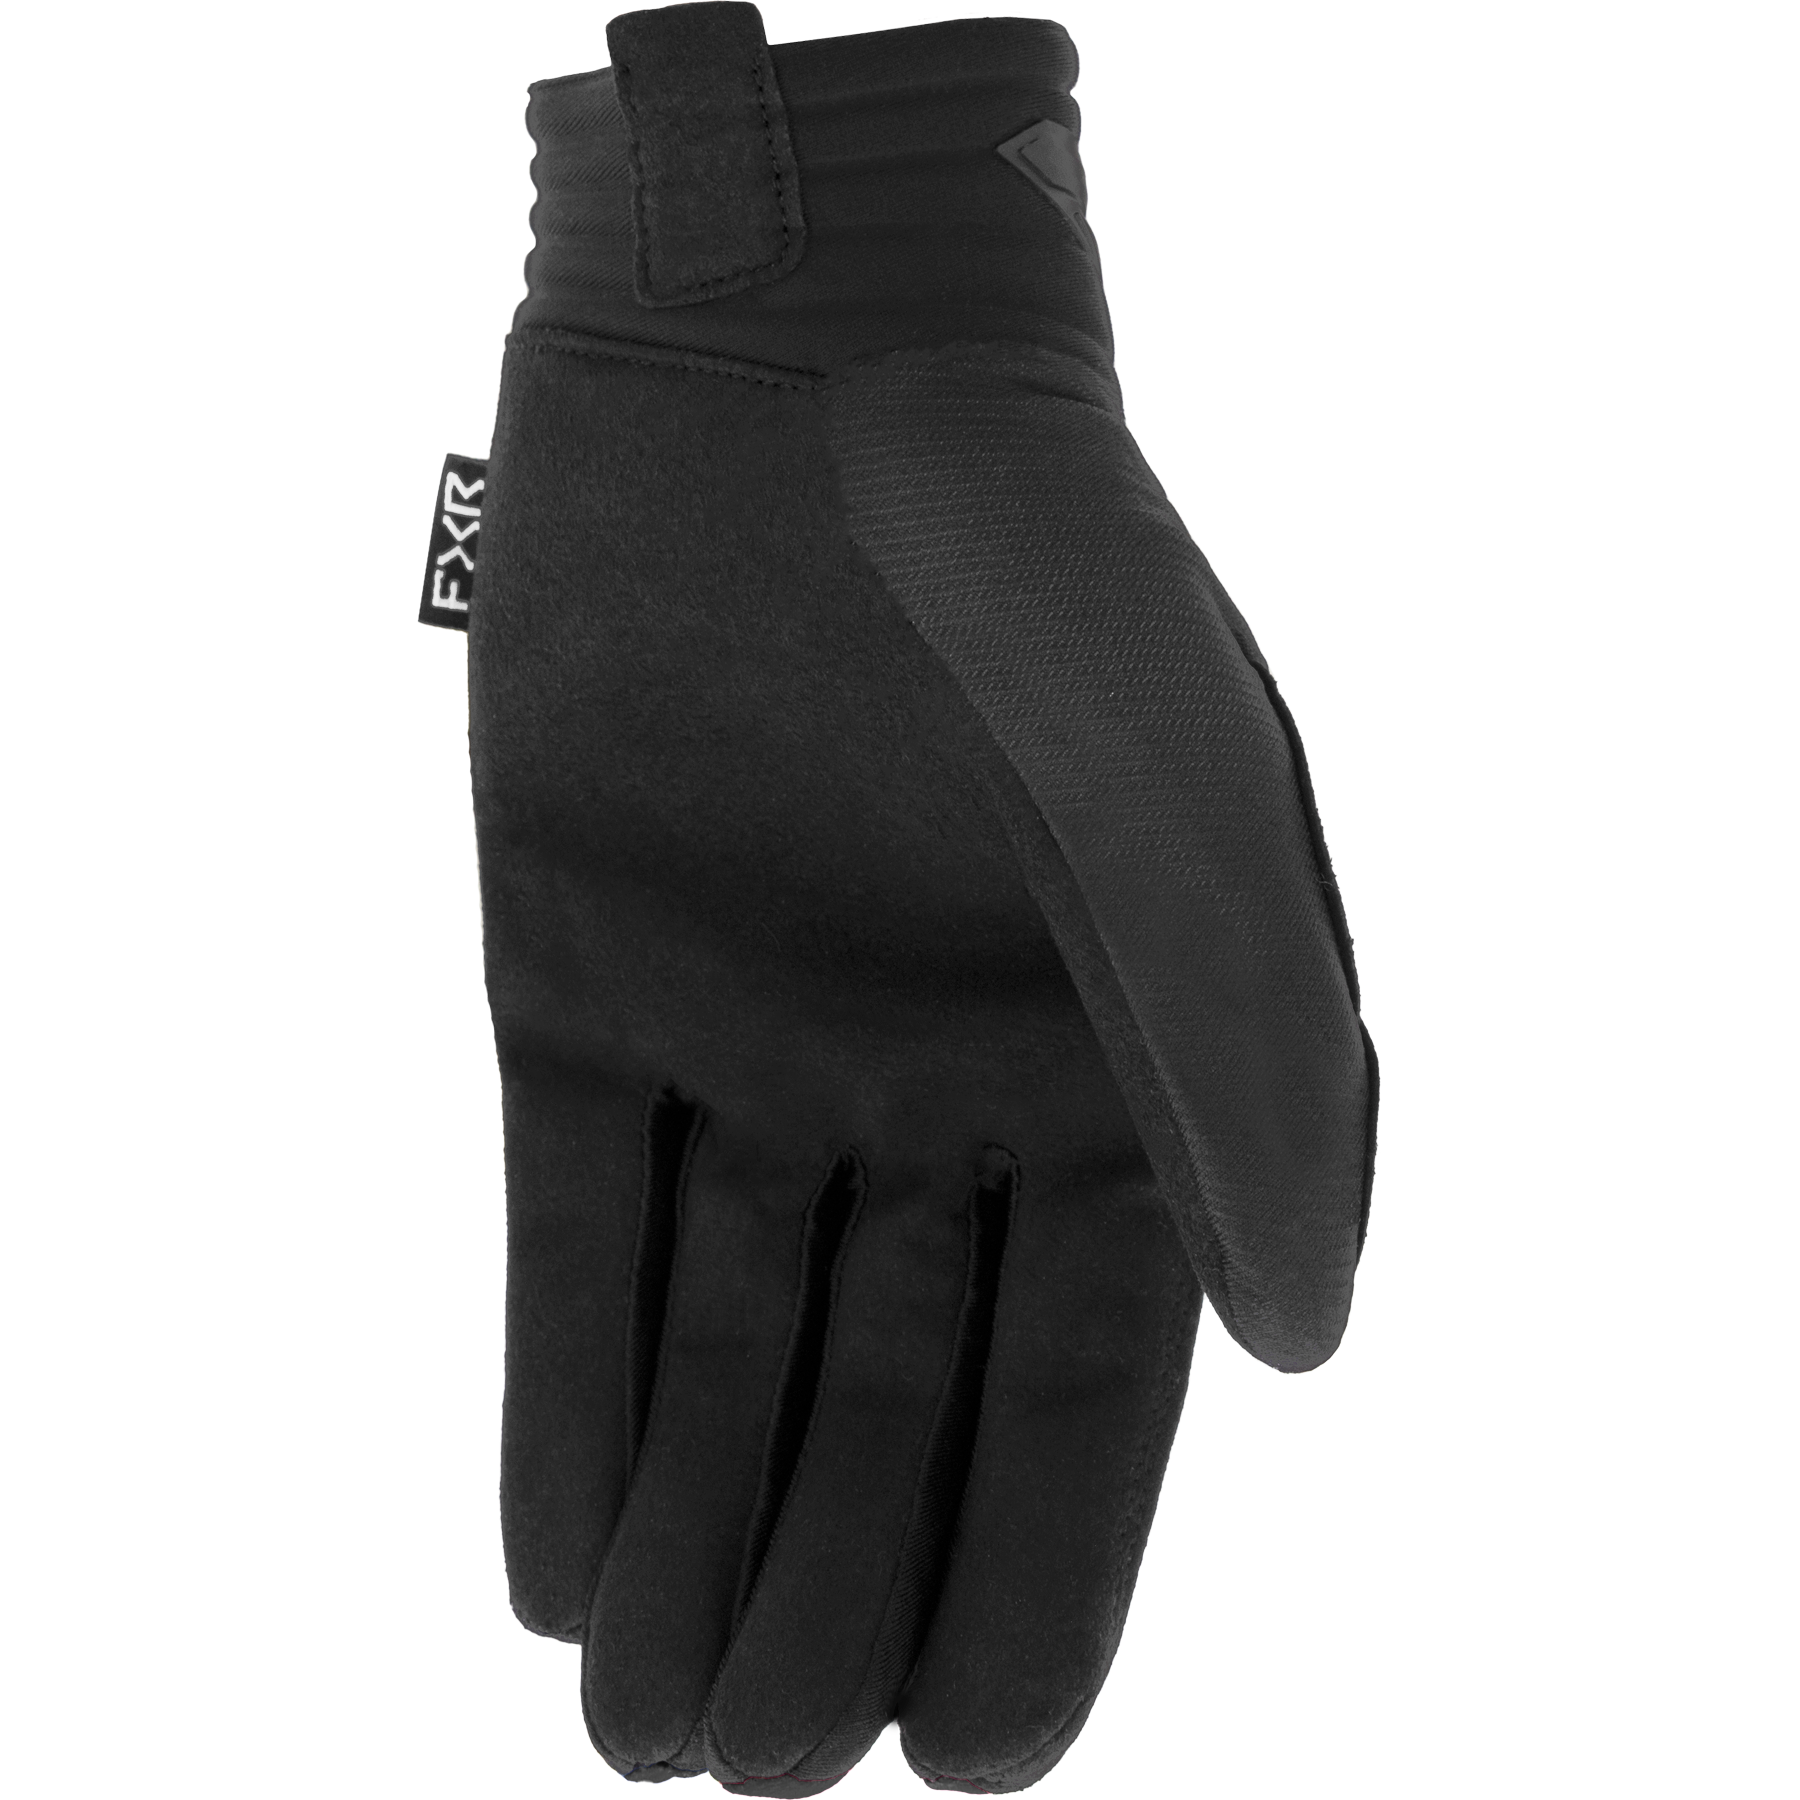 FXR Prime MX Glove Black/White